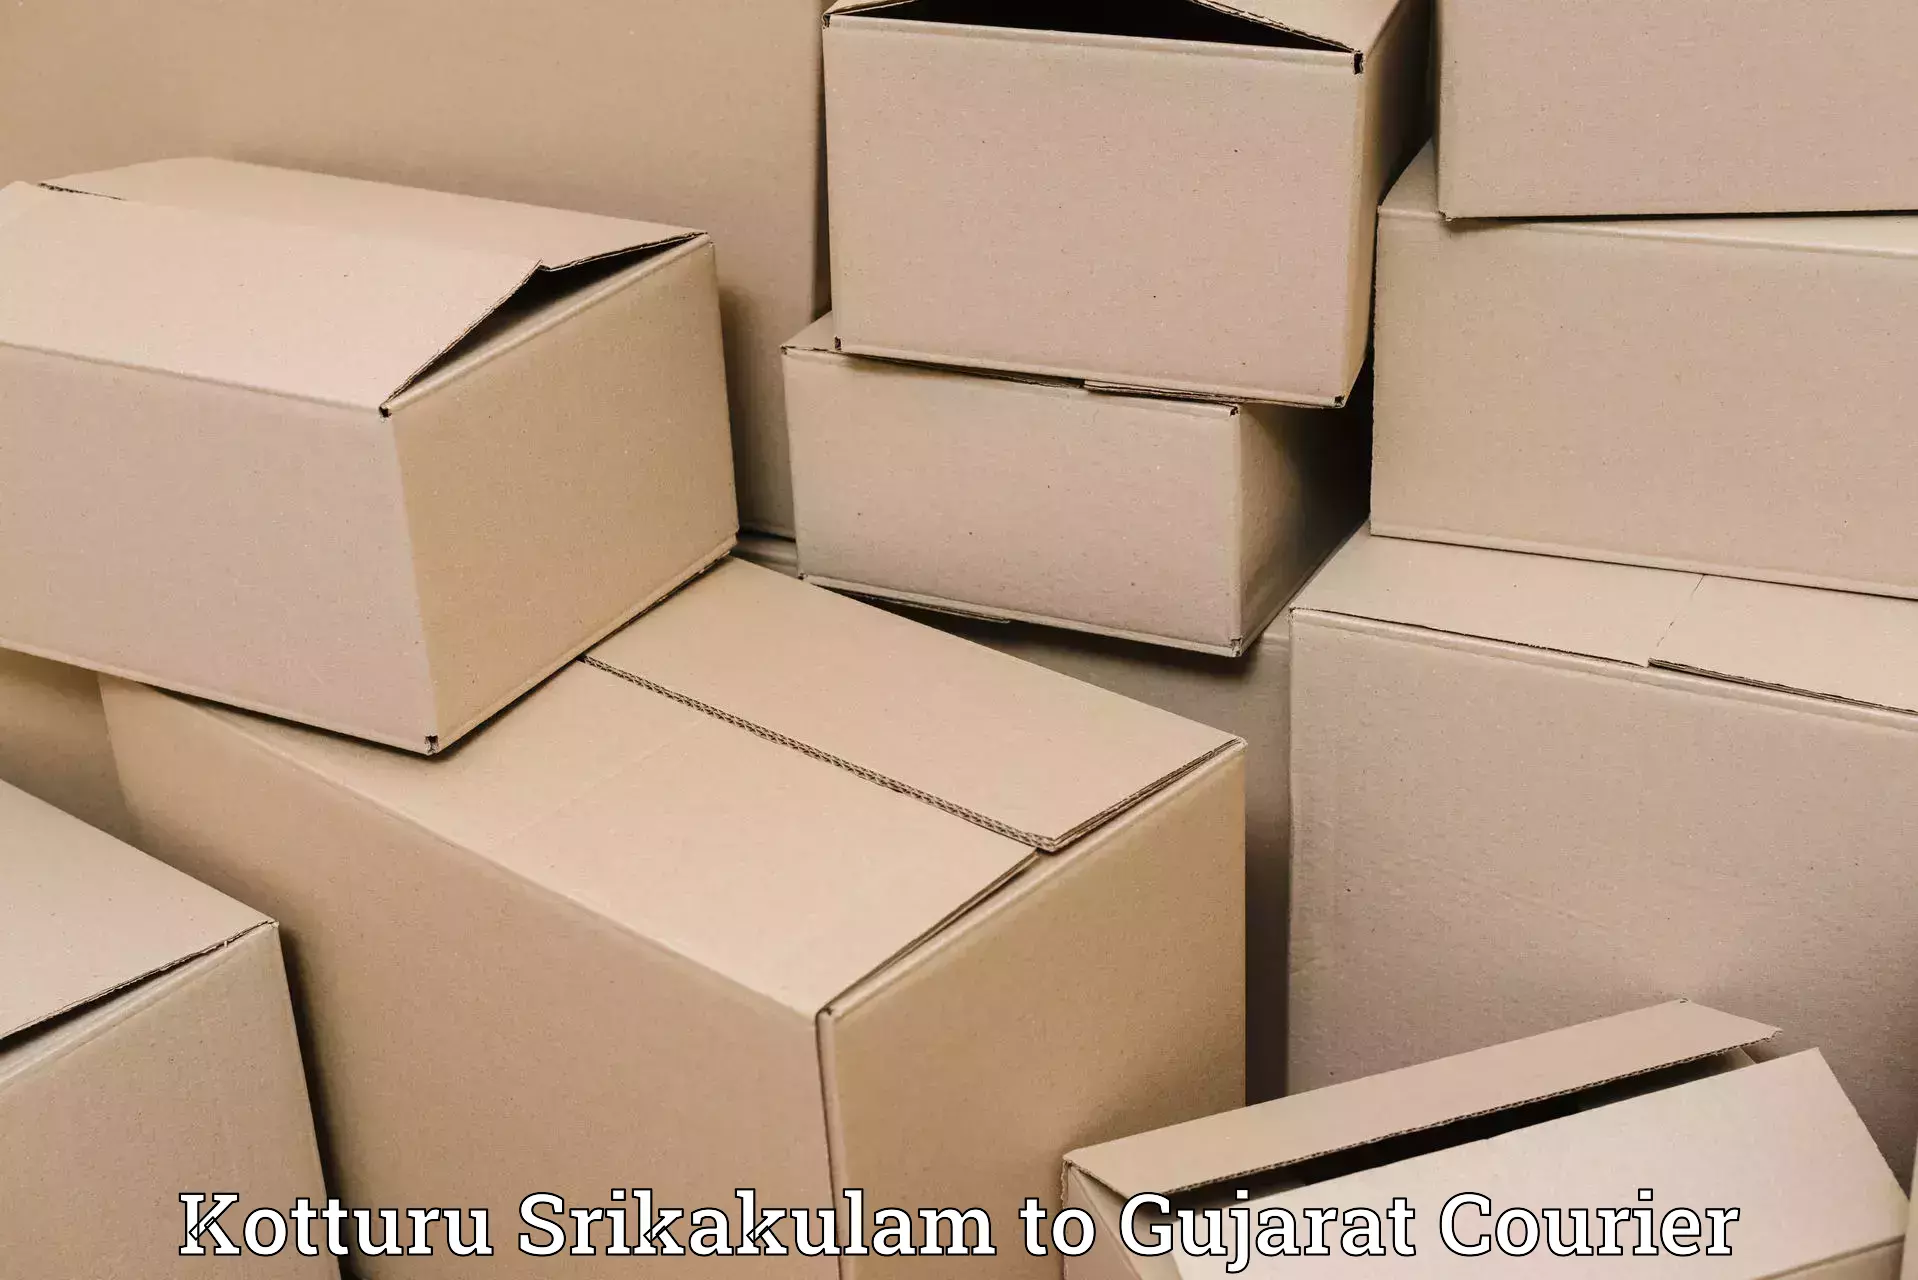 Professional delivery solutions Kotturu Srikakulam to Songadh